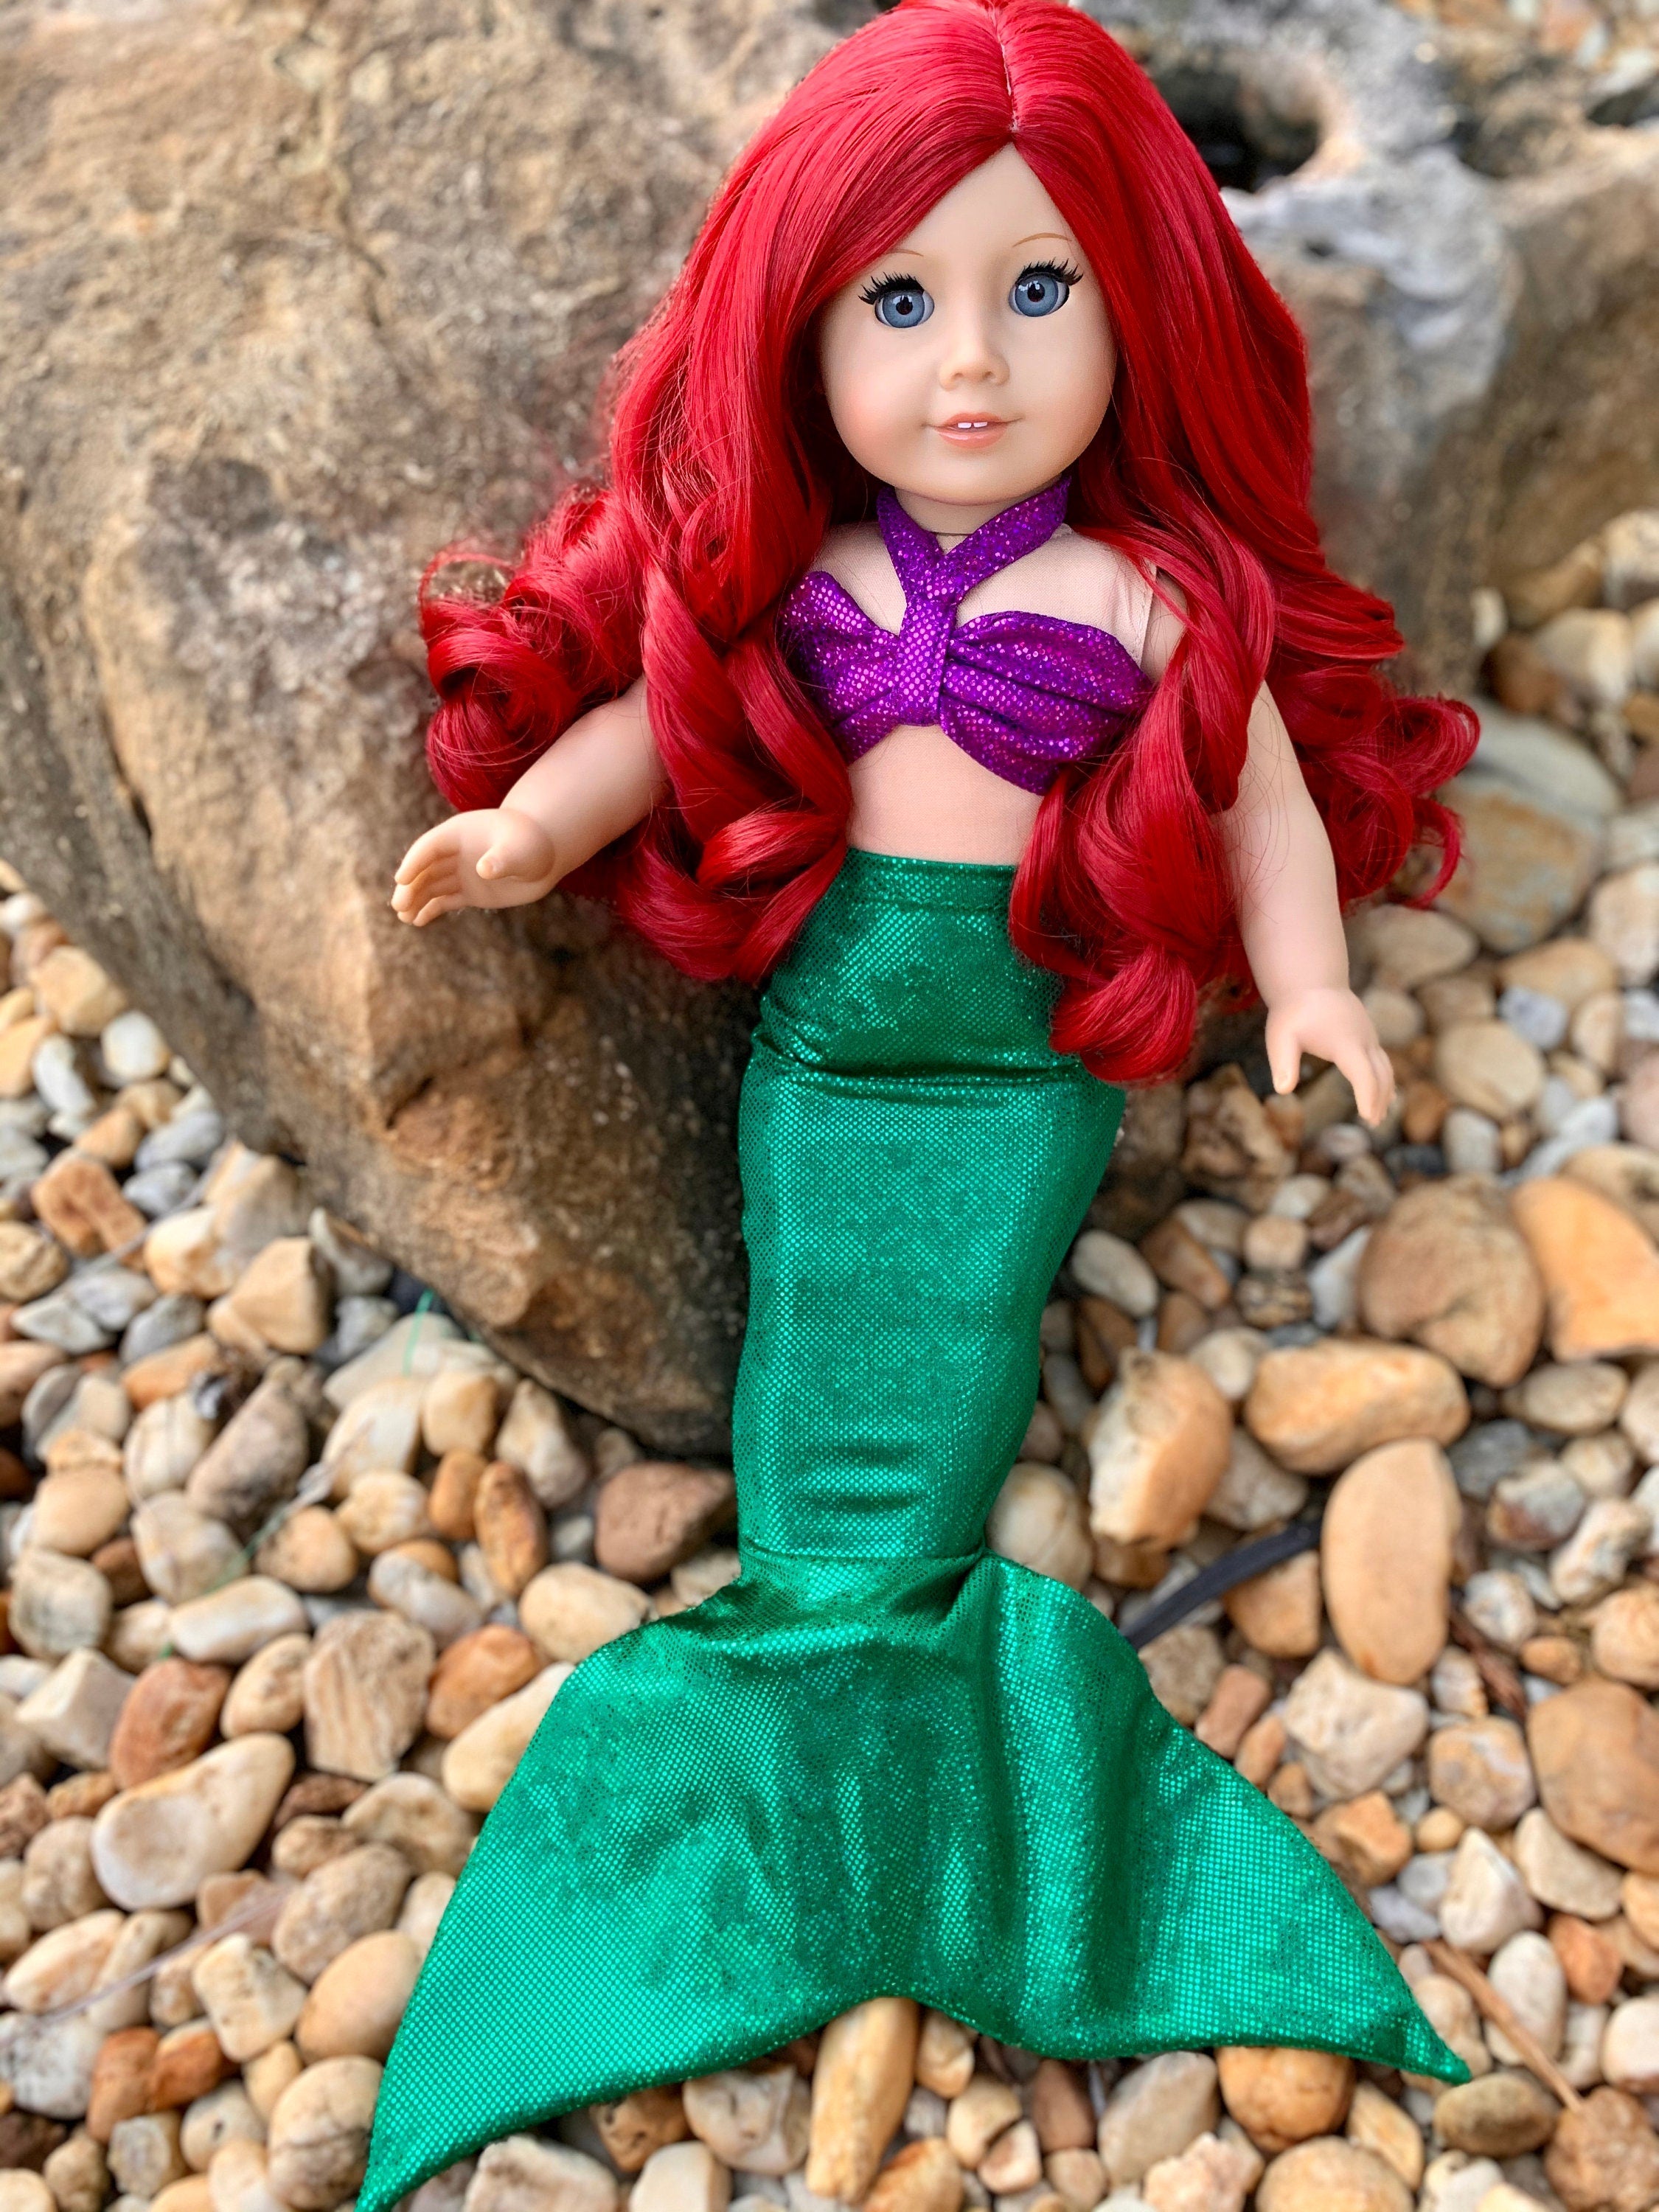 Custom doll wig for 18" American Girl Dolls - Heat & Tangle Resistant -fits 10-11" head size of 18" dolls BJD Gotz Little mermaid Ariel red